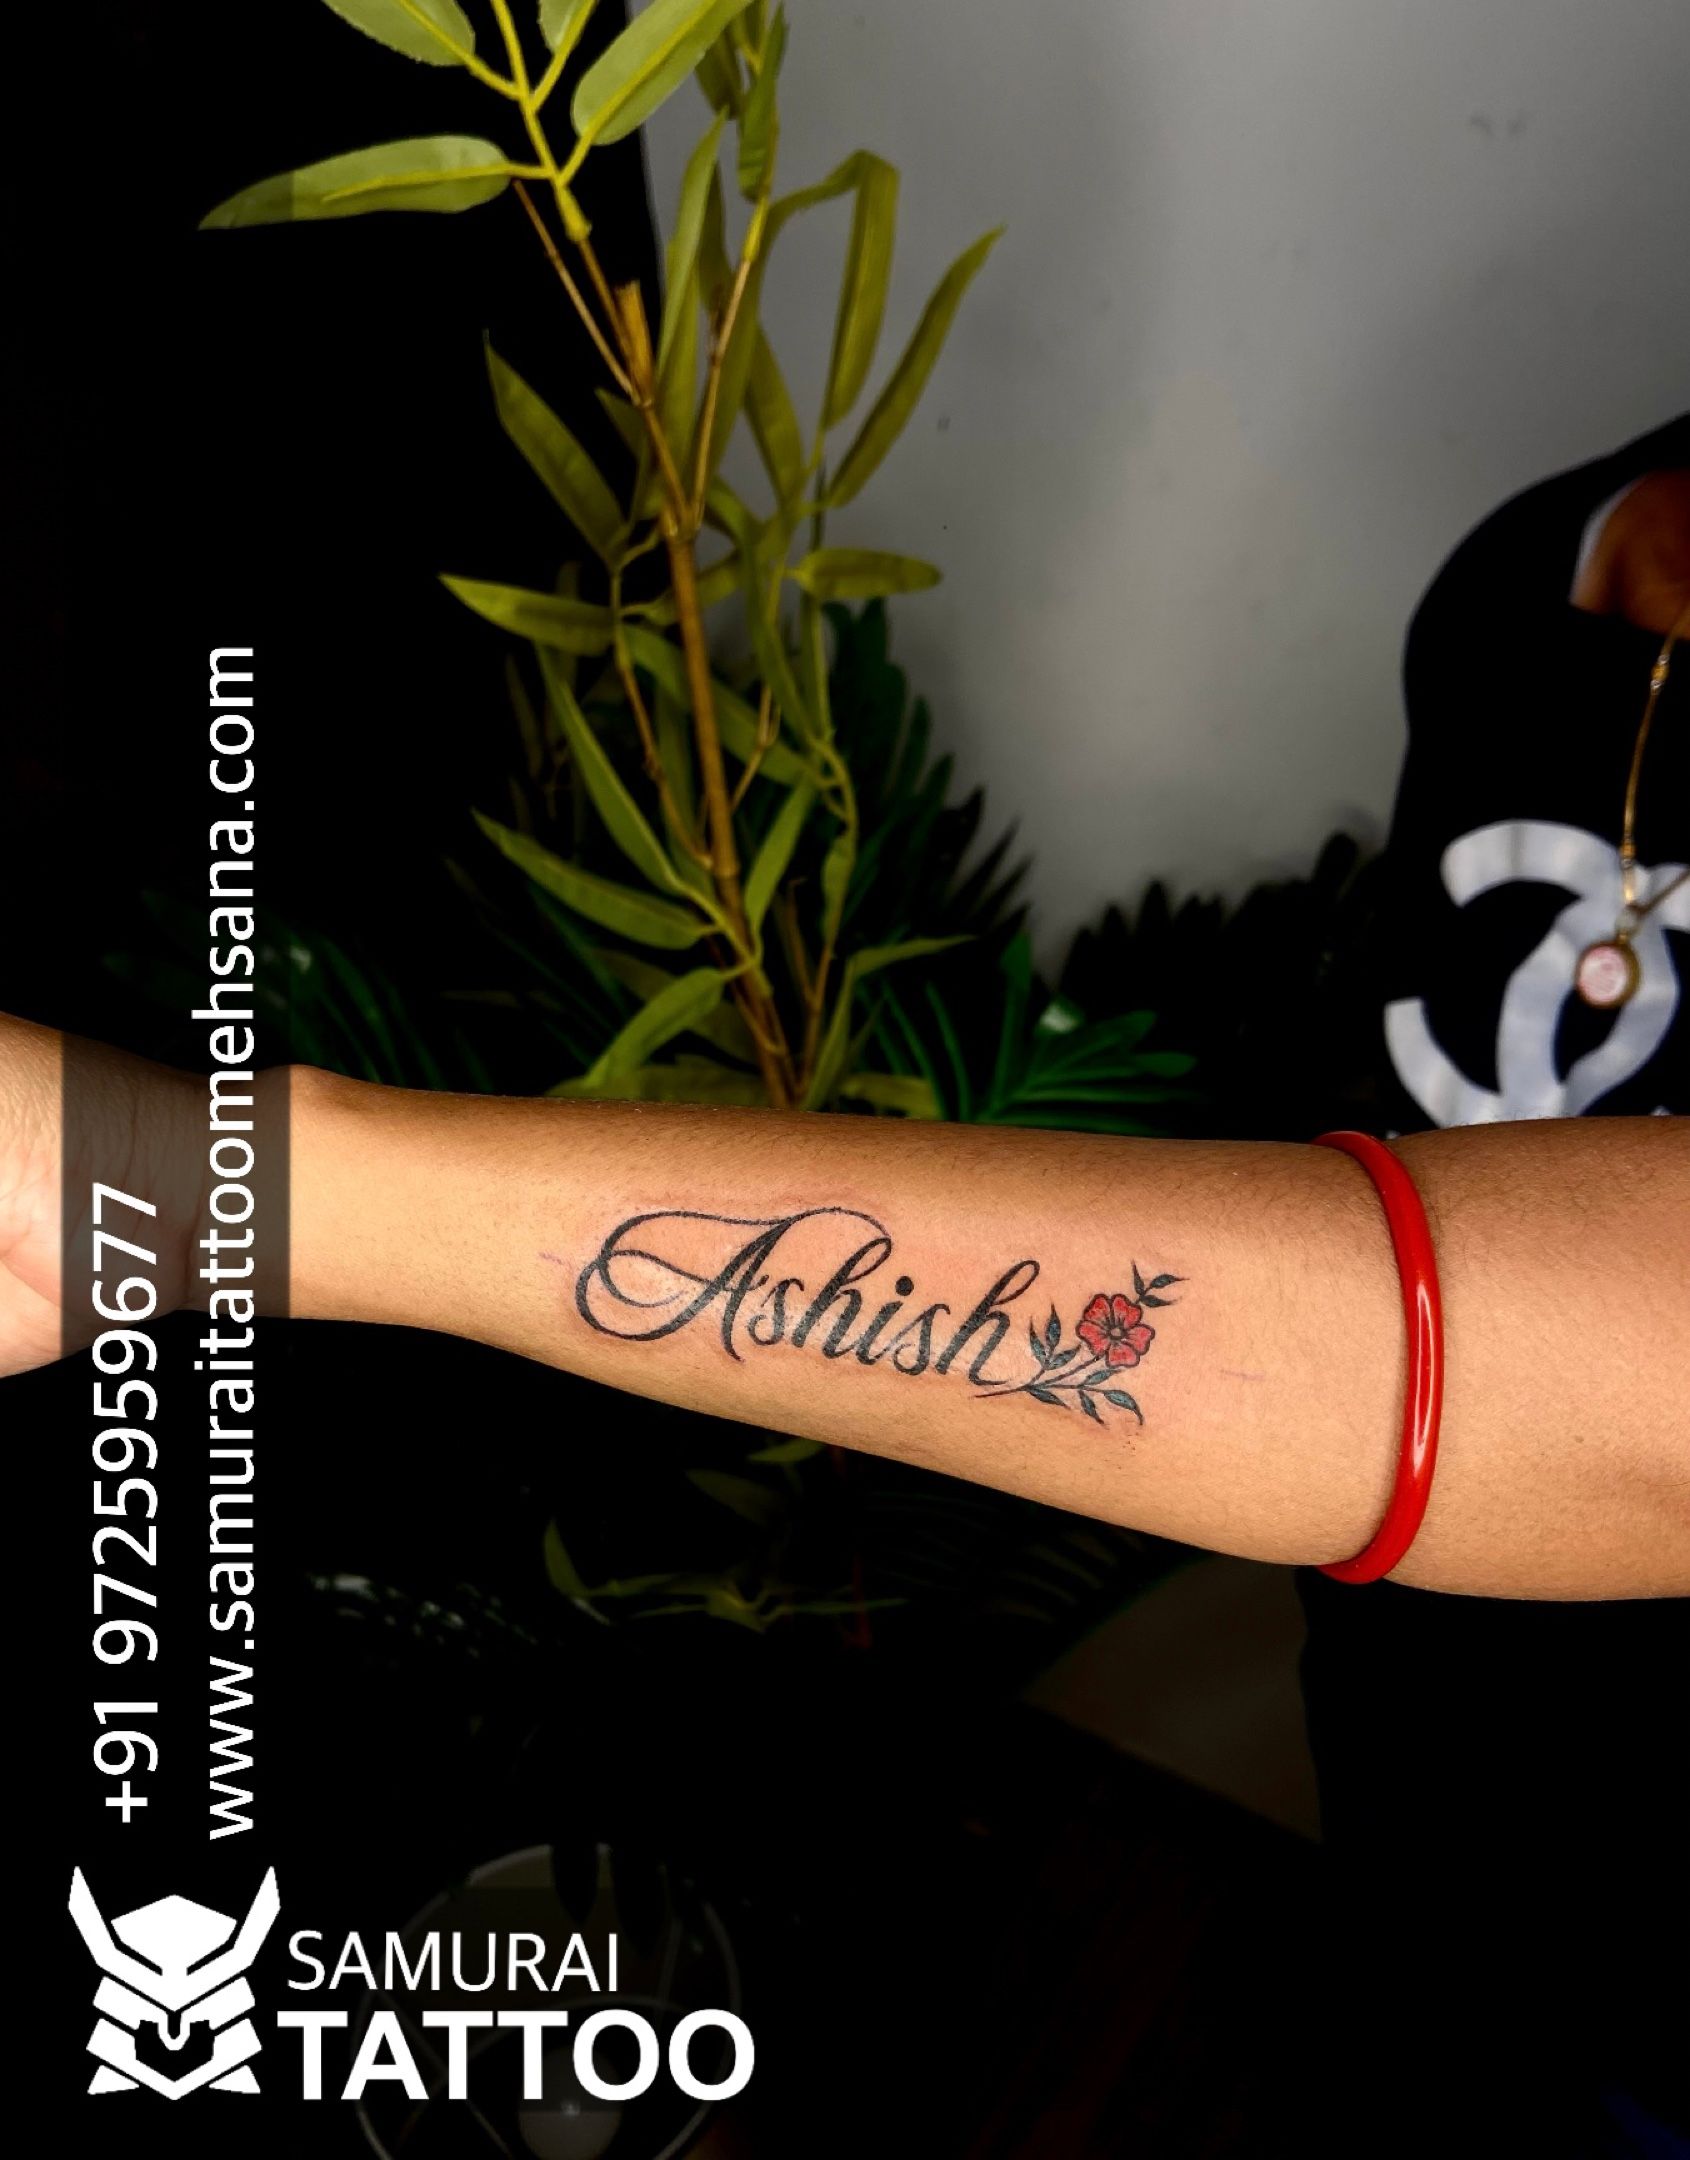 Vimoksha Tattoos & Piercing Studio in Chandigarh - Name tattoo with  heartbeat . . 📞 9888641414 📍 Vimoksha Tattoos Studio, SCO-61 Second  floor, Sector 30C, Chandigarh-160030 . . #nametattoos #tattoo #tattoos  #tattooideas #